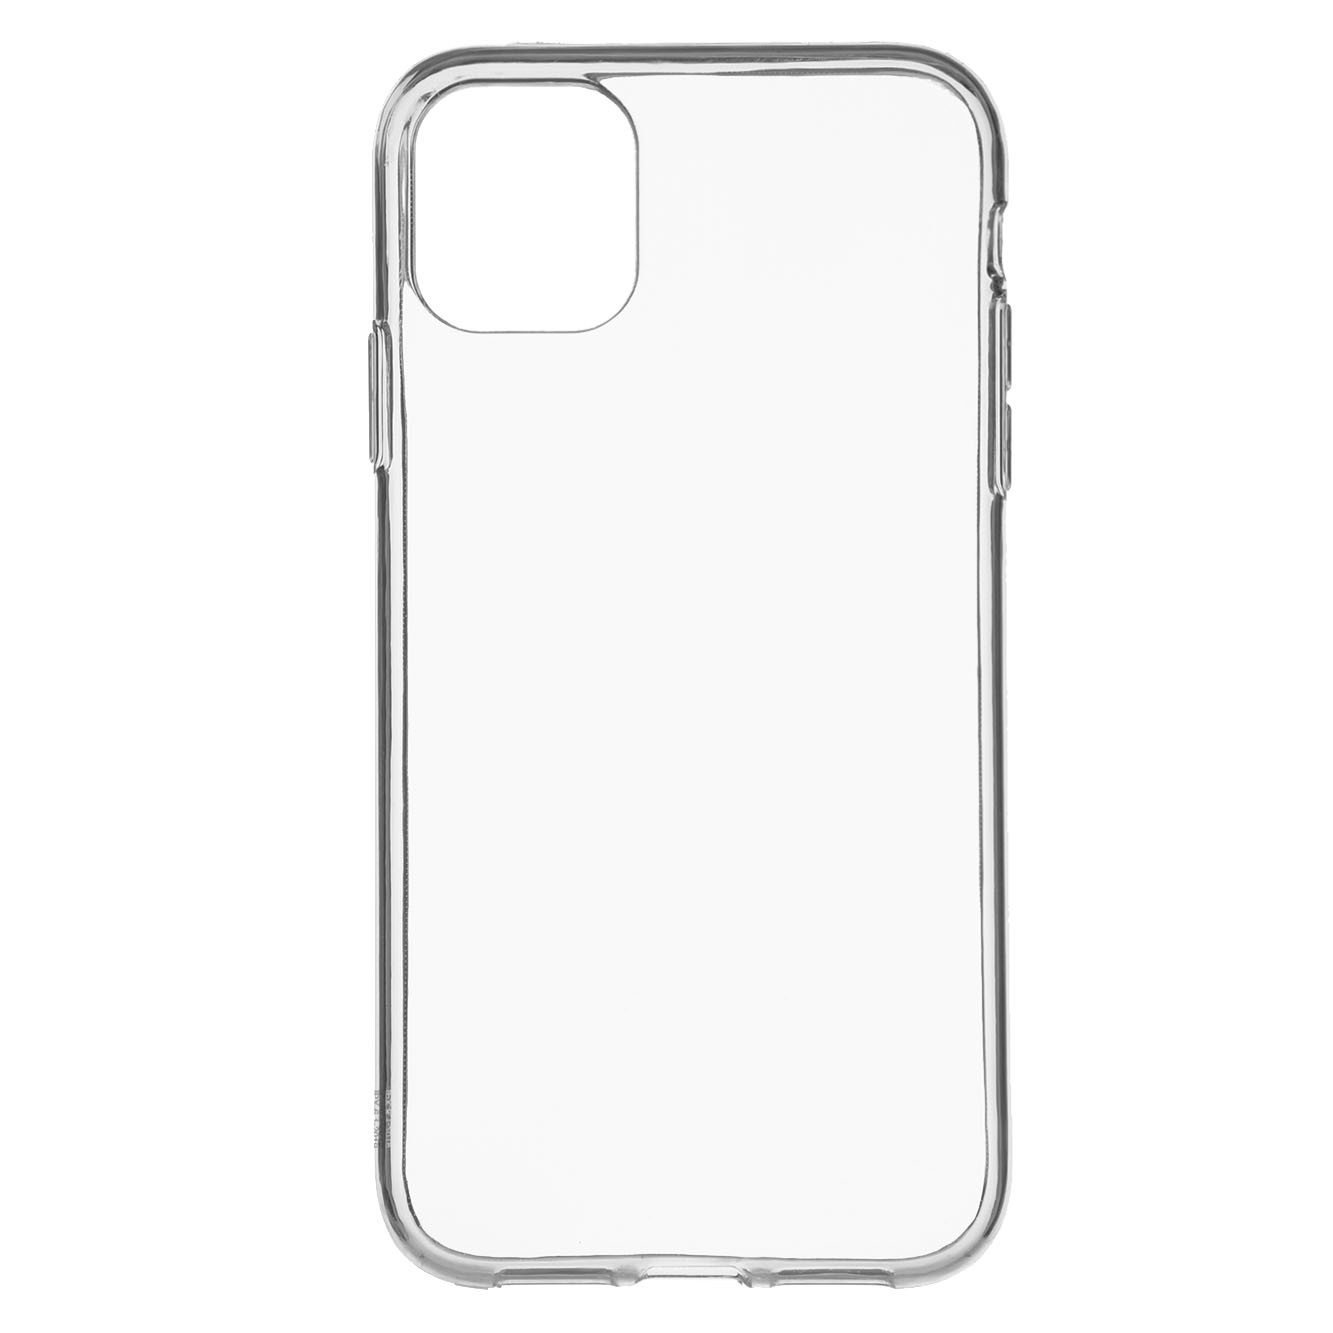 Funda Carcasa transparente silicona iPhone 11 Pro Max